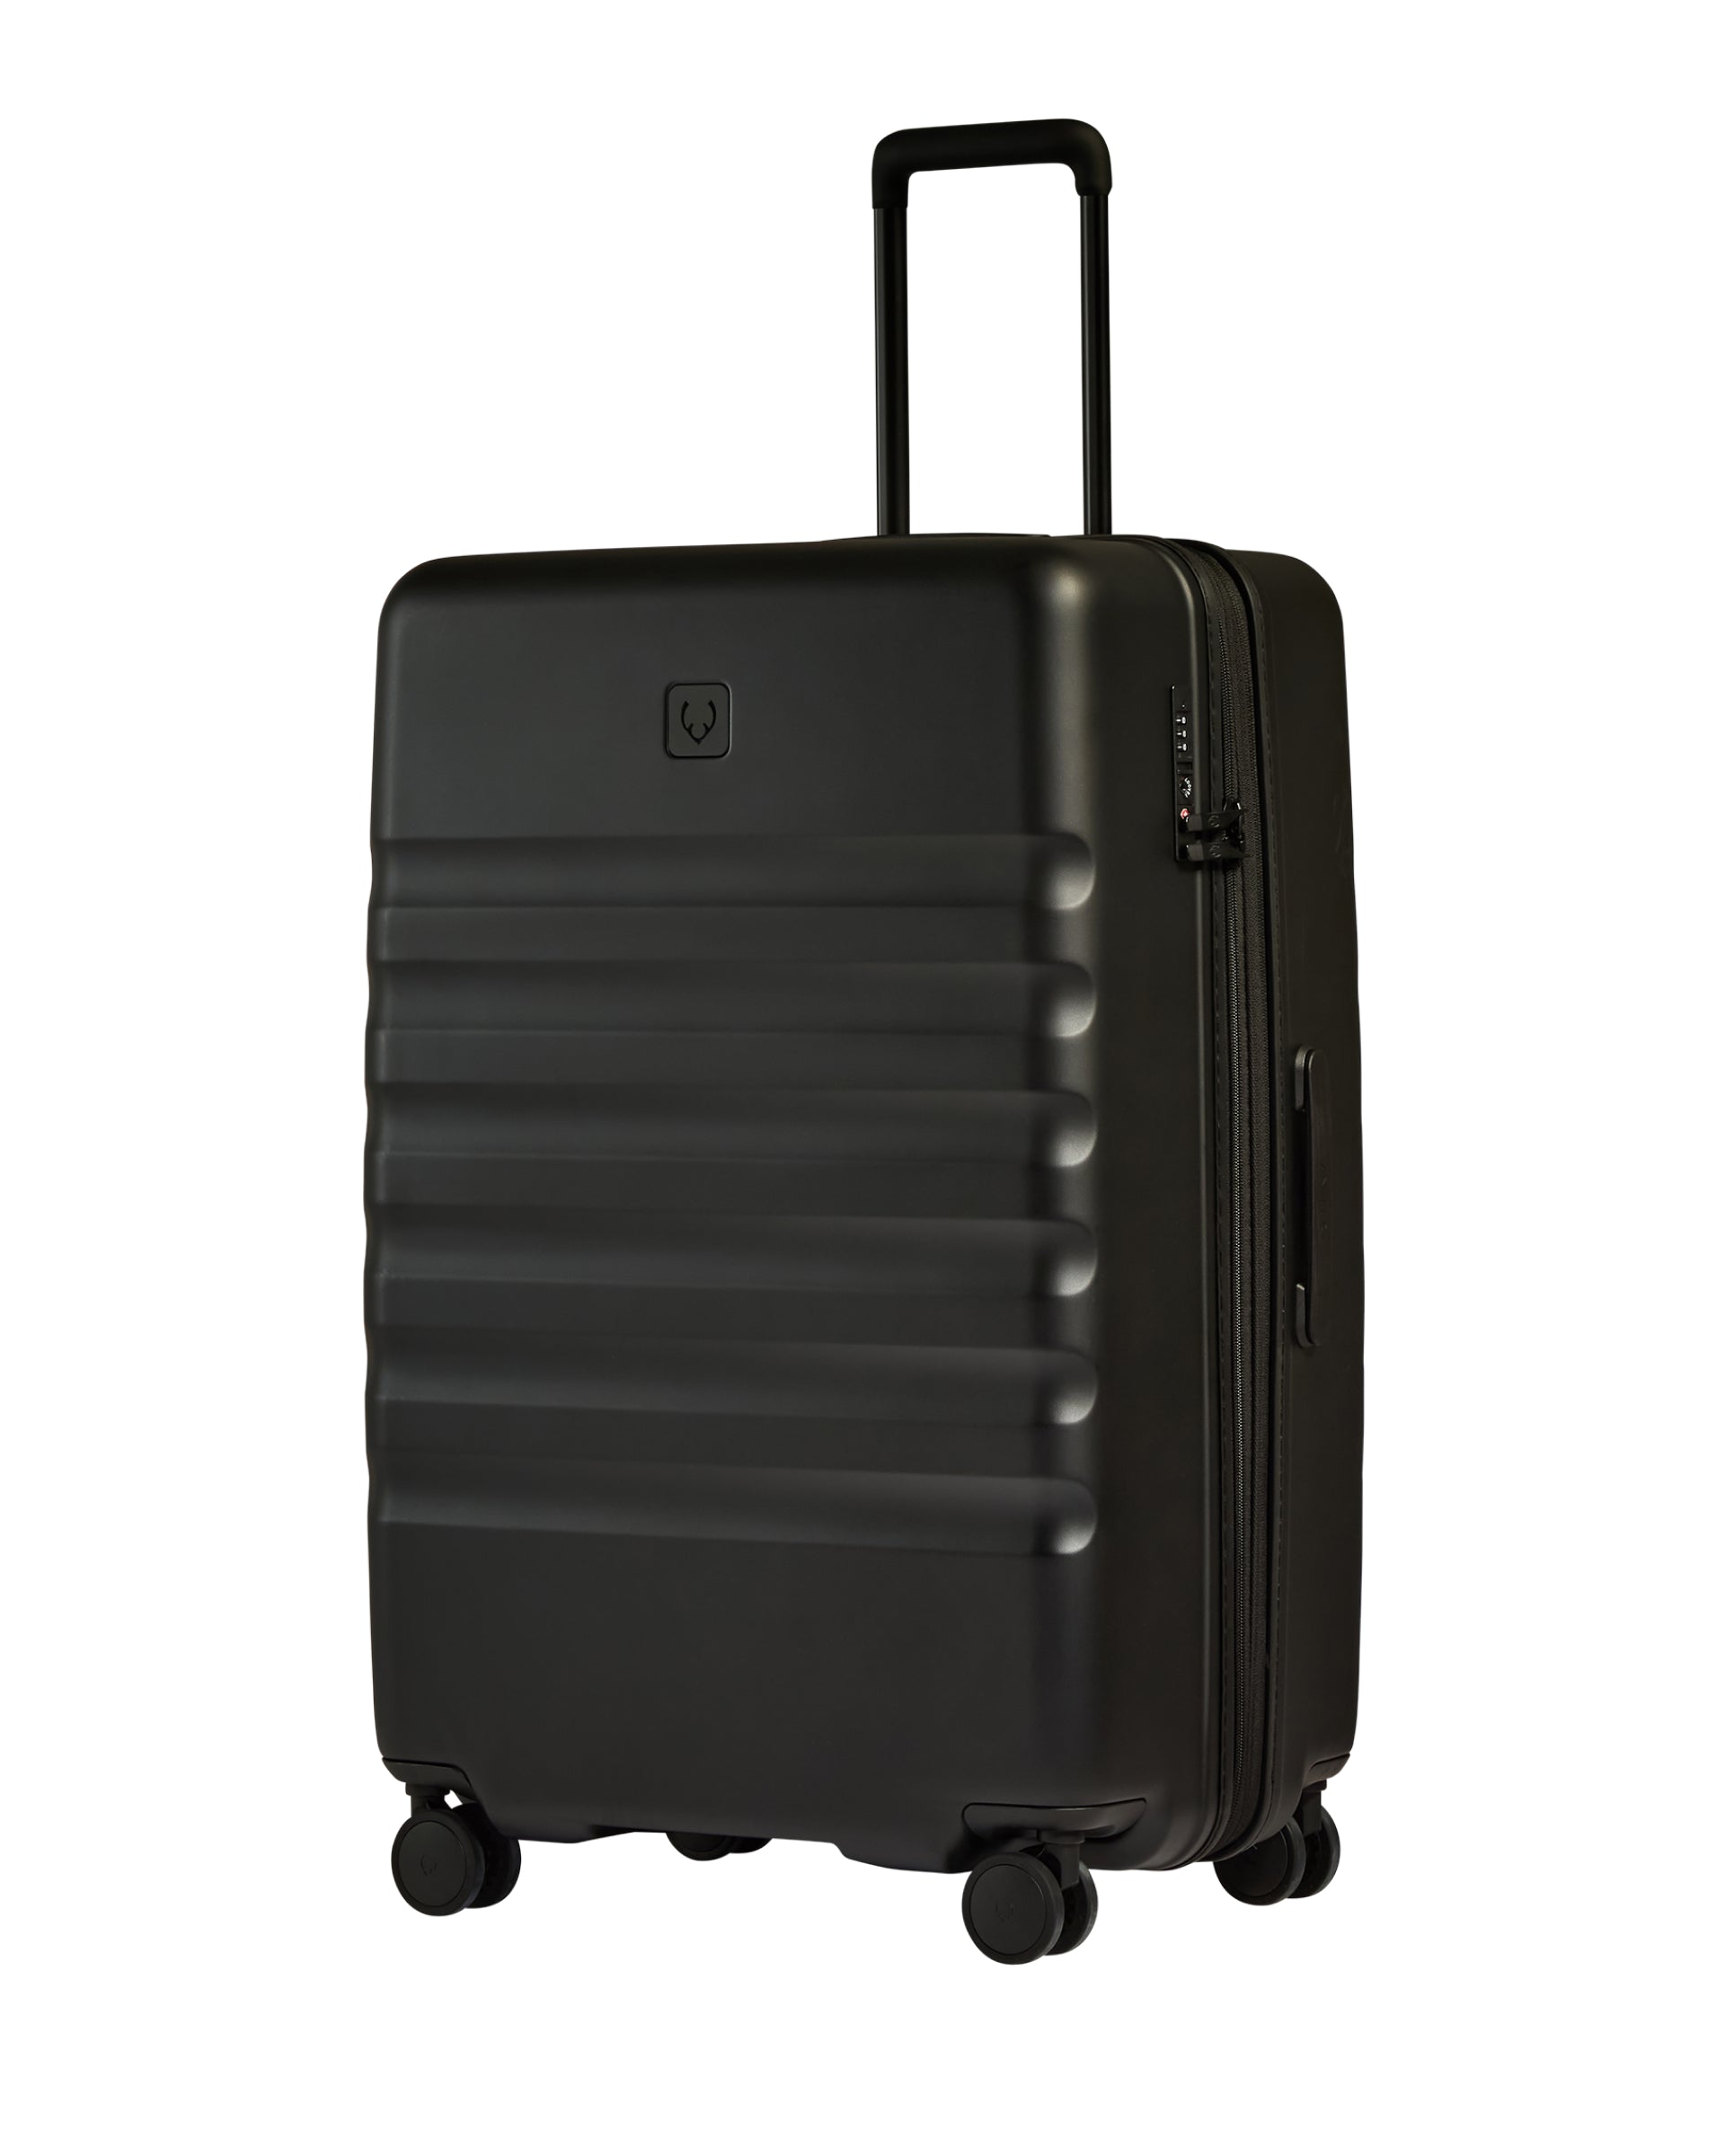 View Antler Icon Stripe Large Suitcase In Black Size 336cm x 78cm x 517cm information